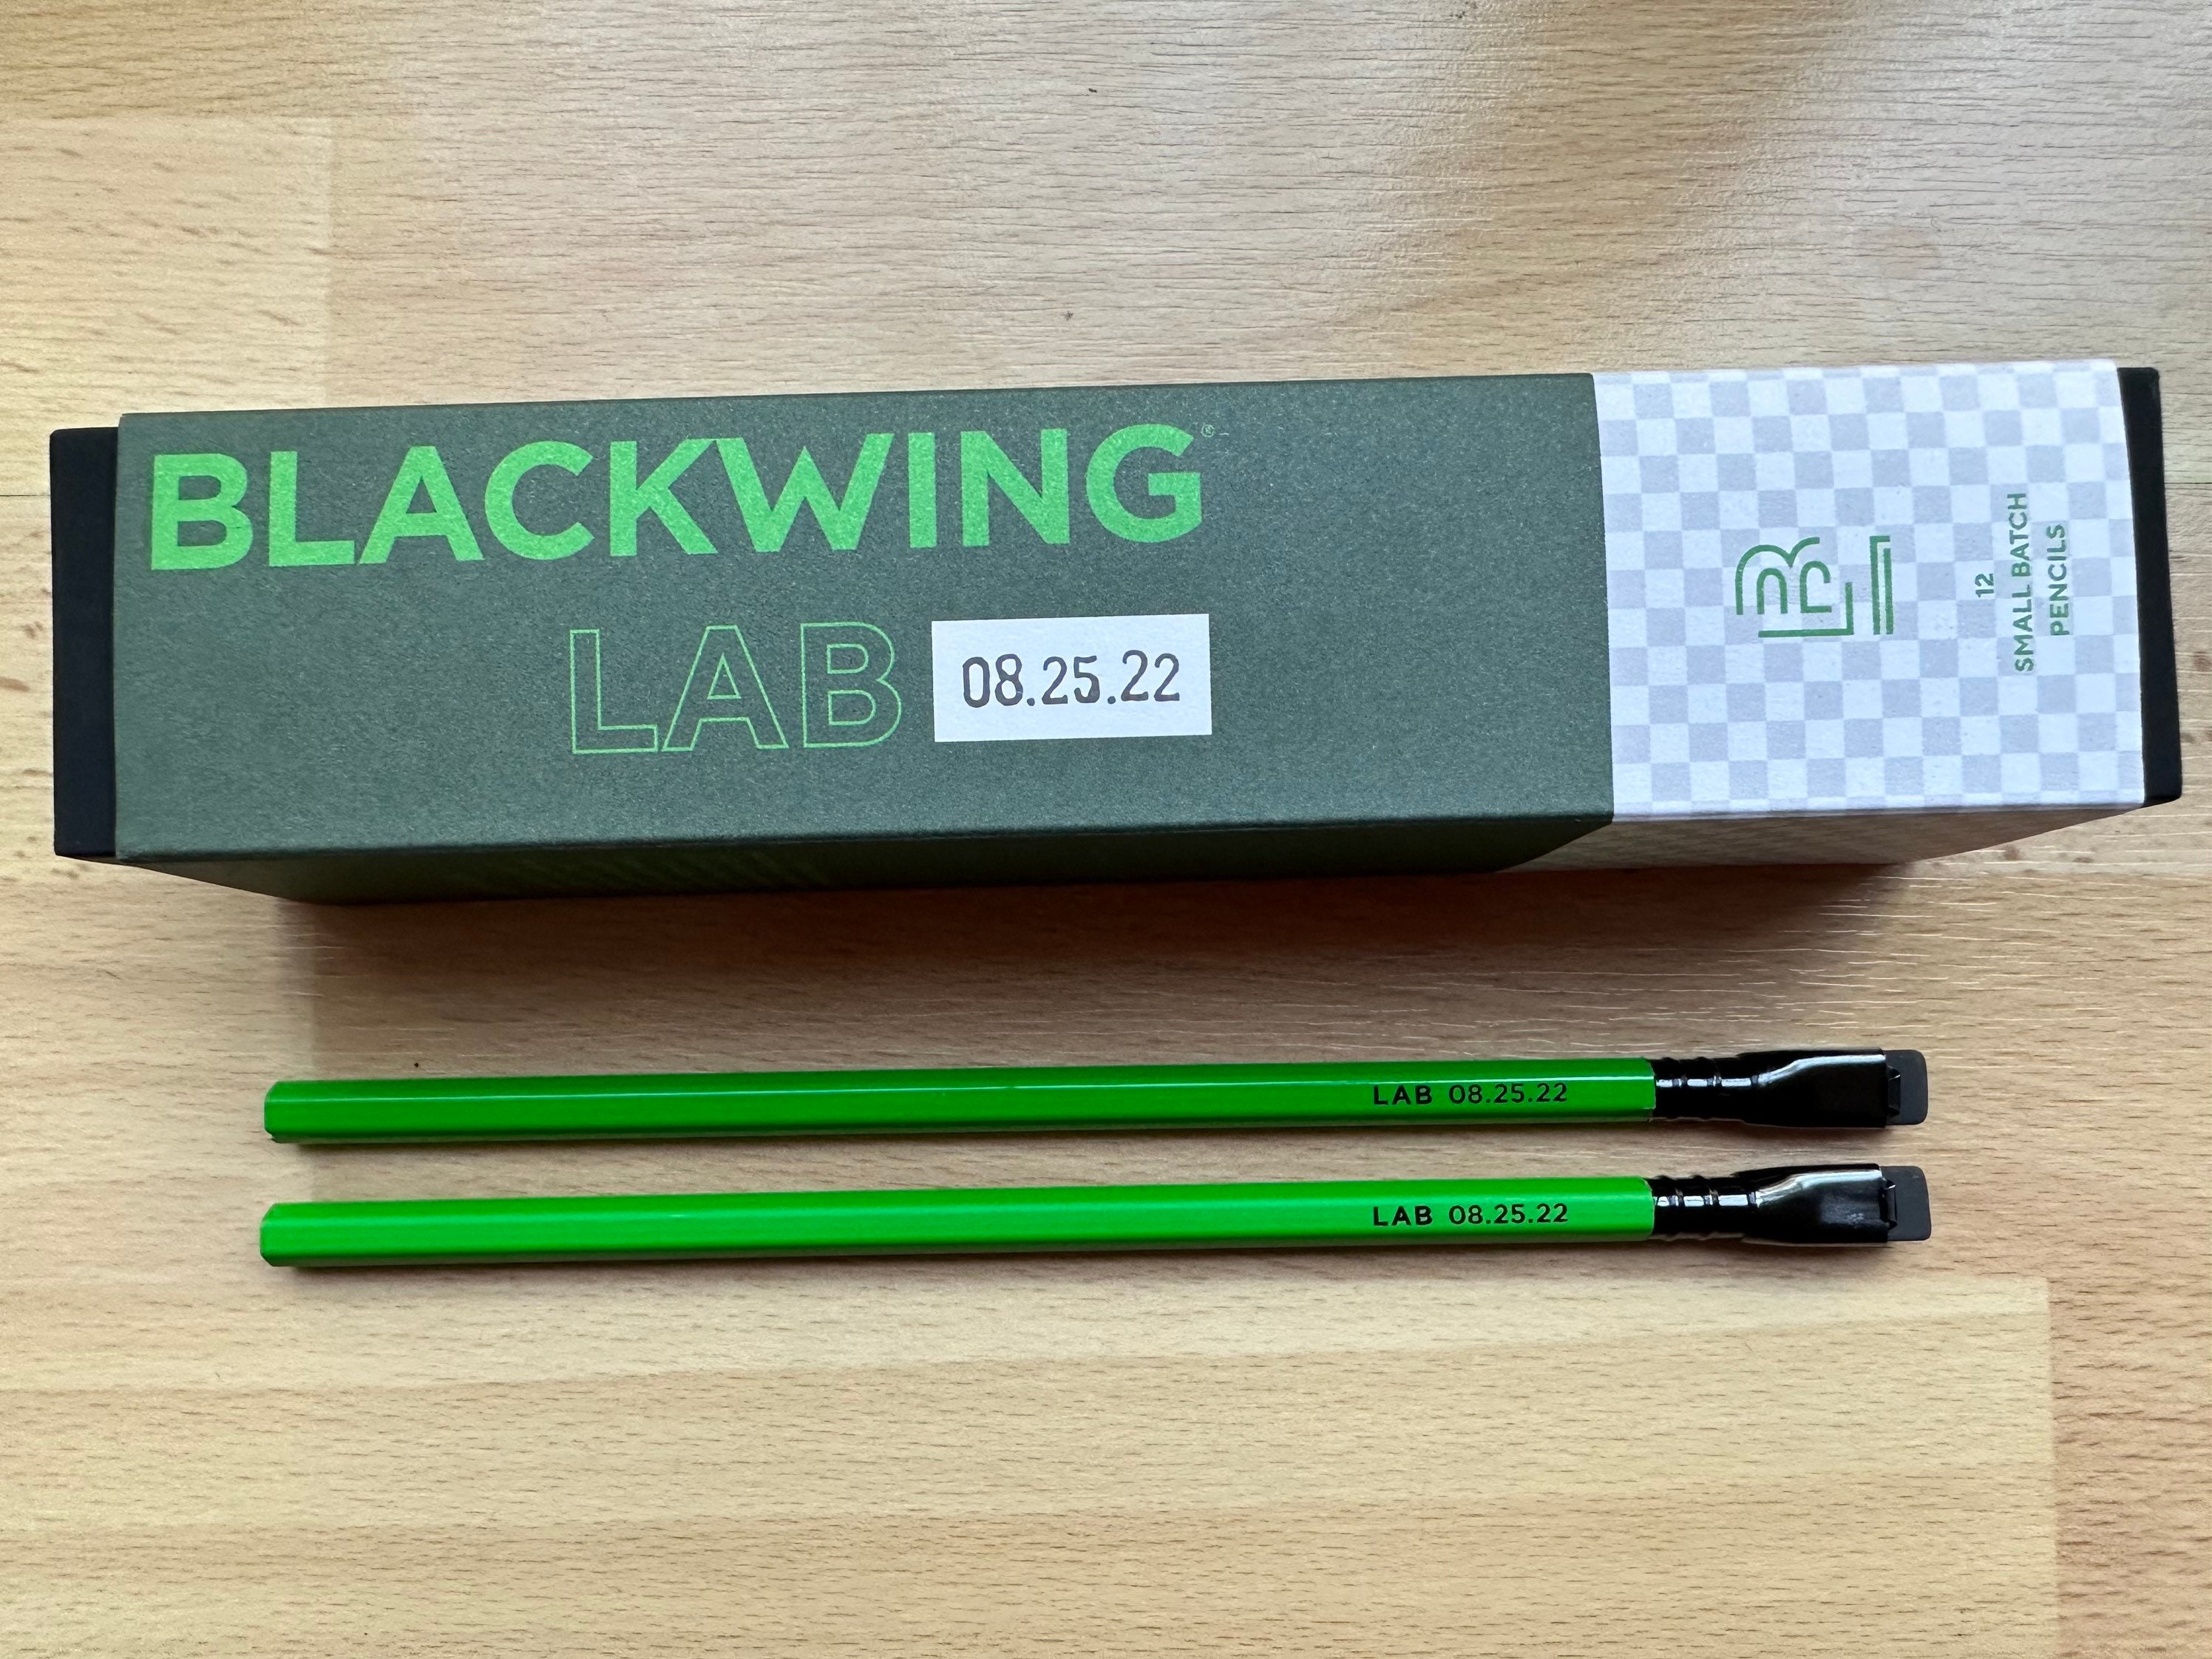 Palomino Blackwing X Neolucida: Three Pencils no Box 